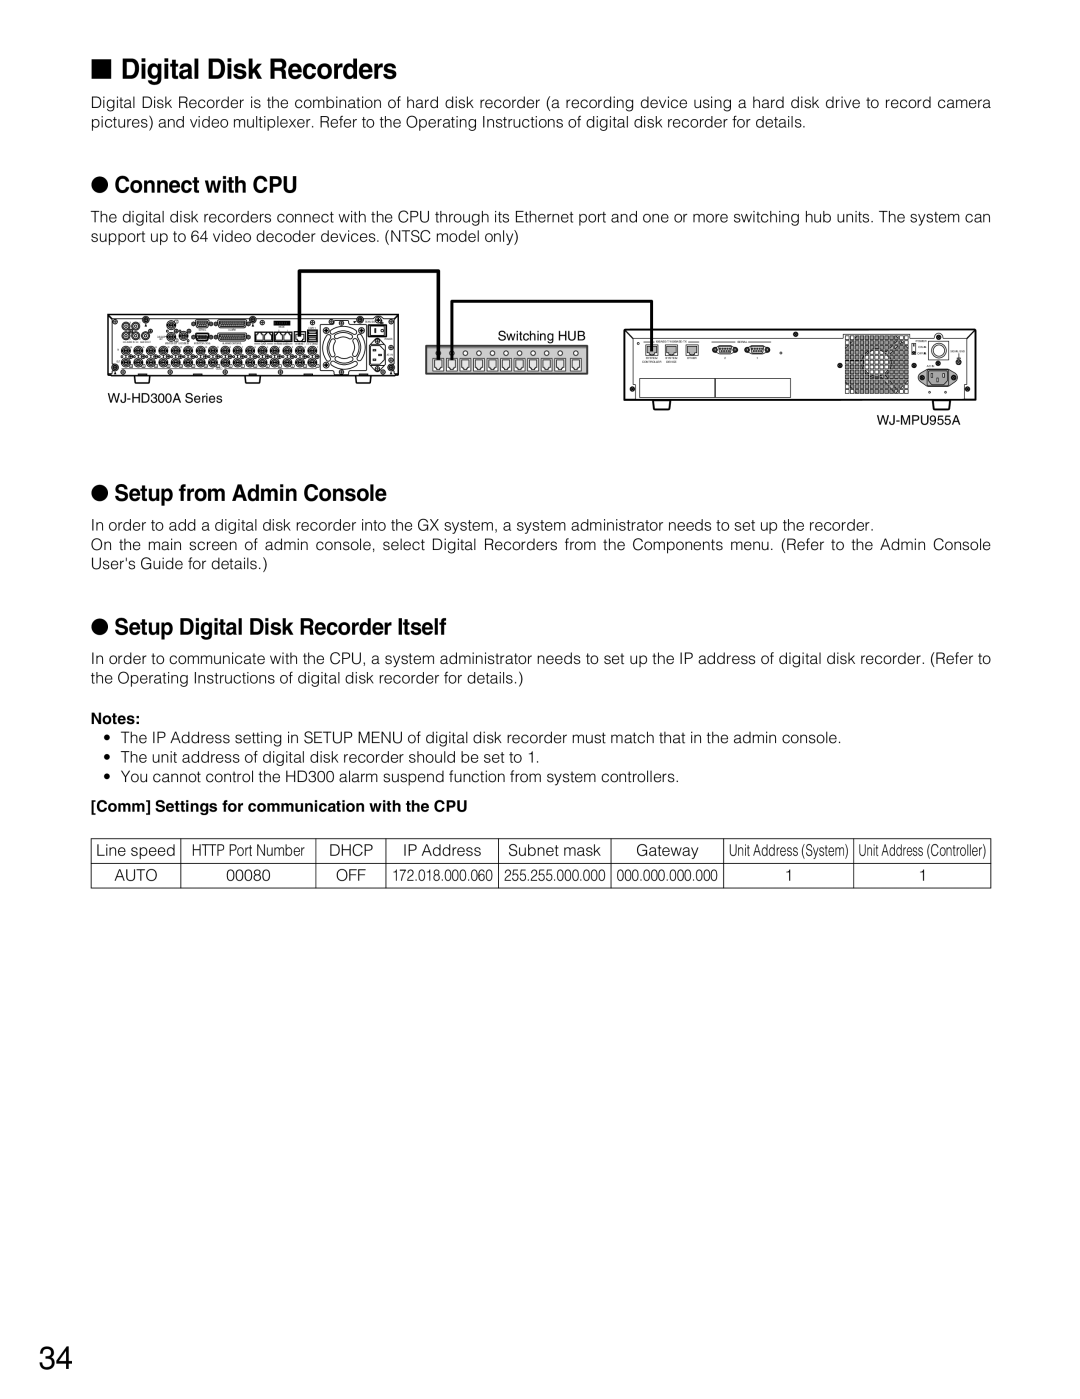 Panasonic WJ-MPU955A manual Digital Disk Recorders, Setup Digital Disk Recorder Itself, Connect with CPU 